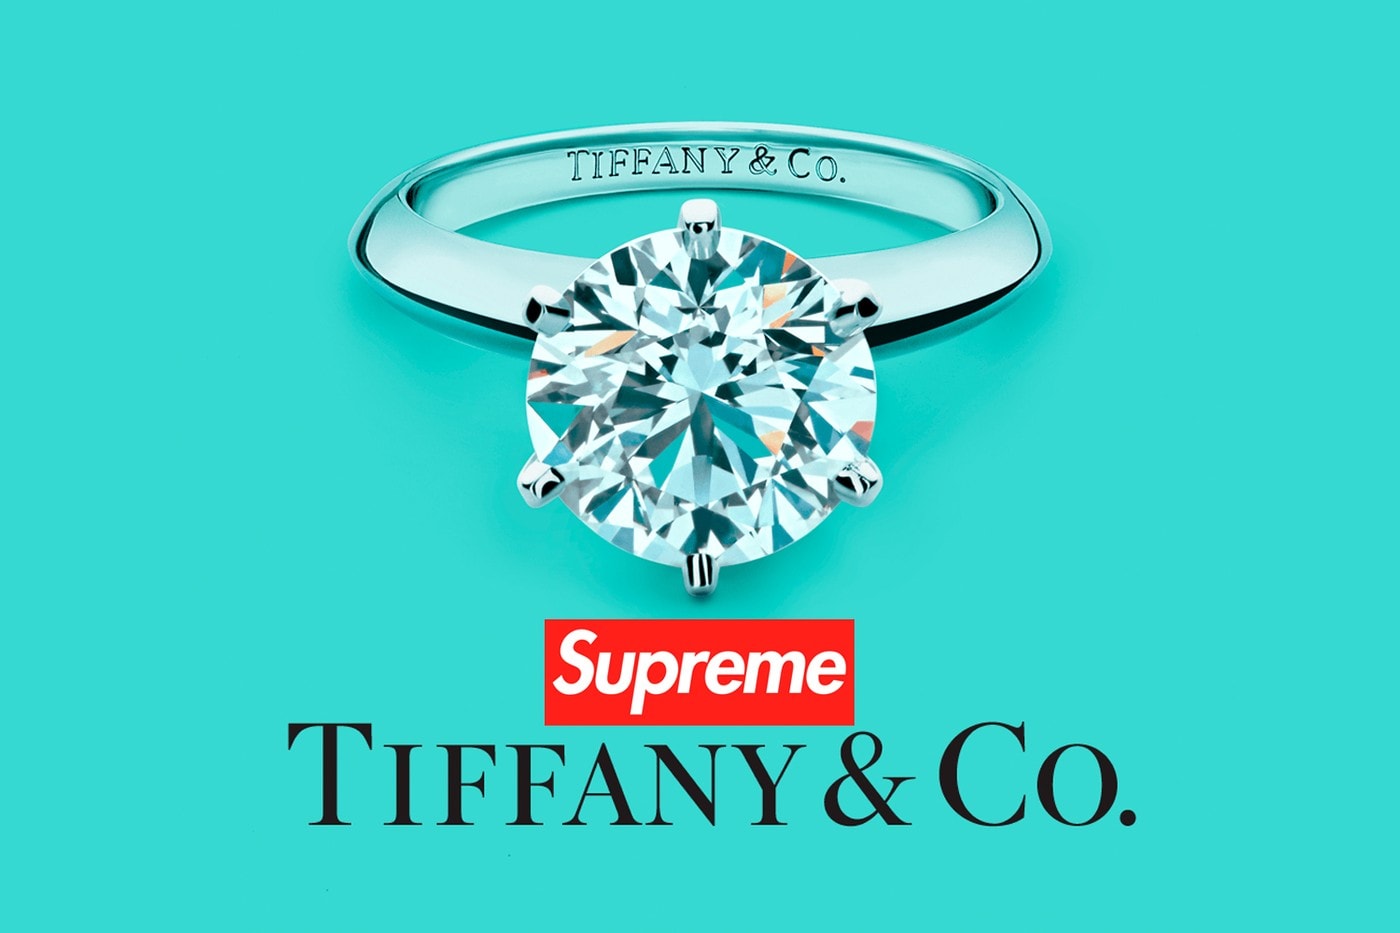 傳言 Supreme 將和 Tiffany & Co. 推出首個聯名系列